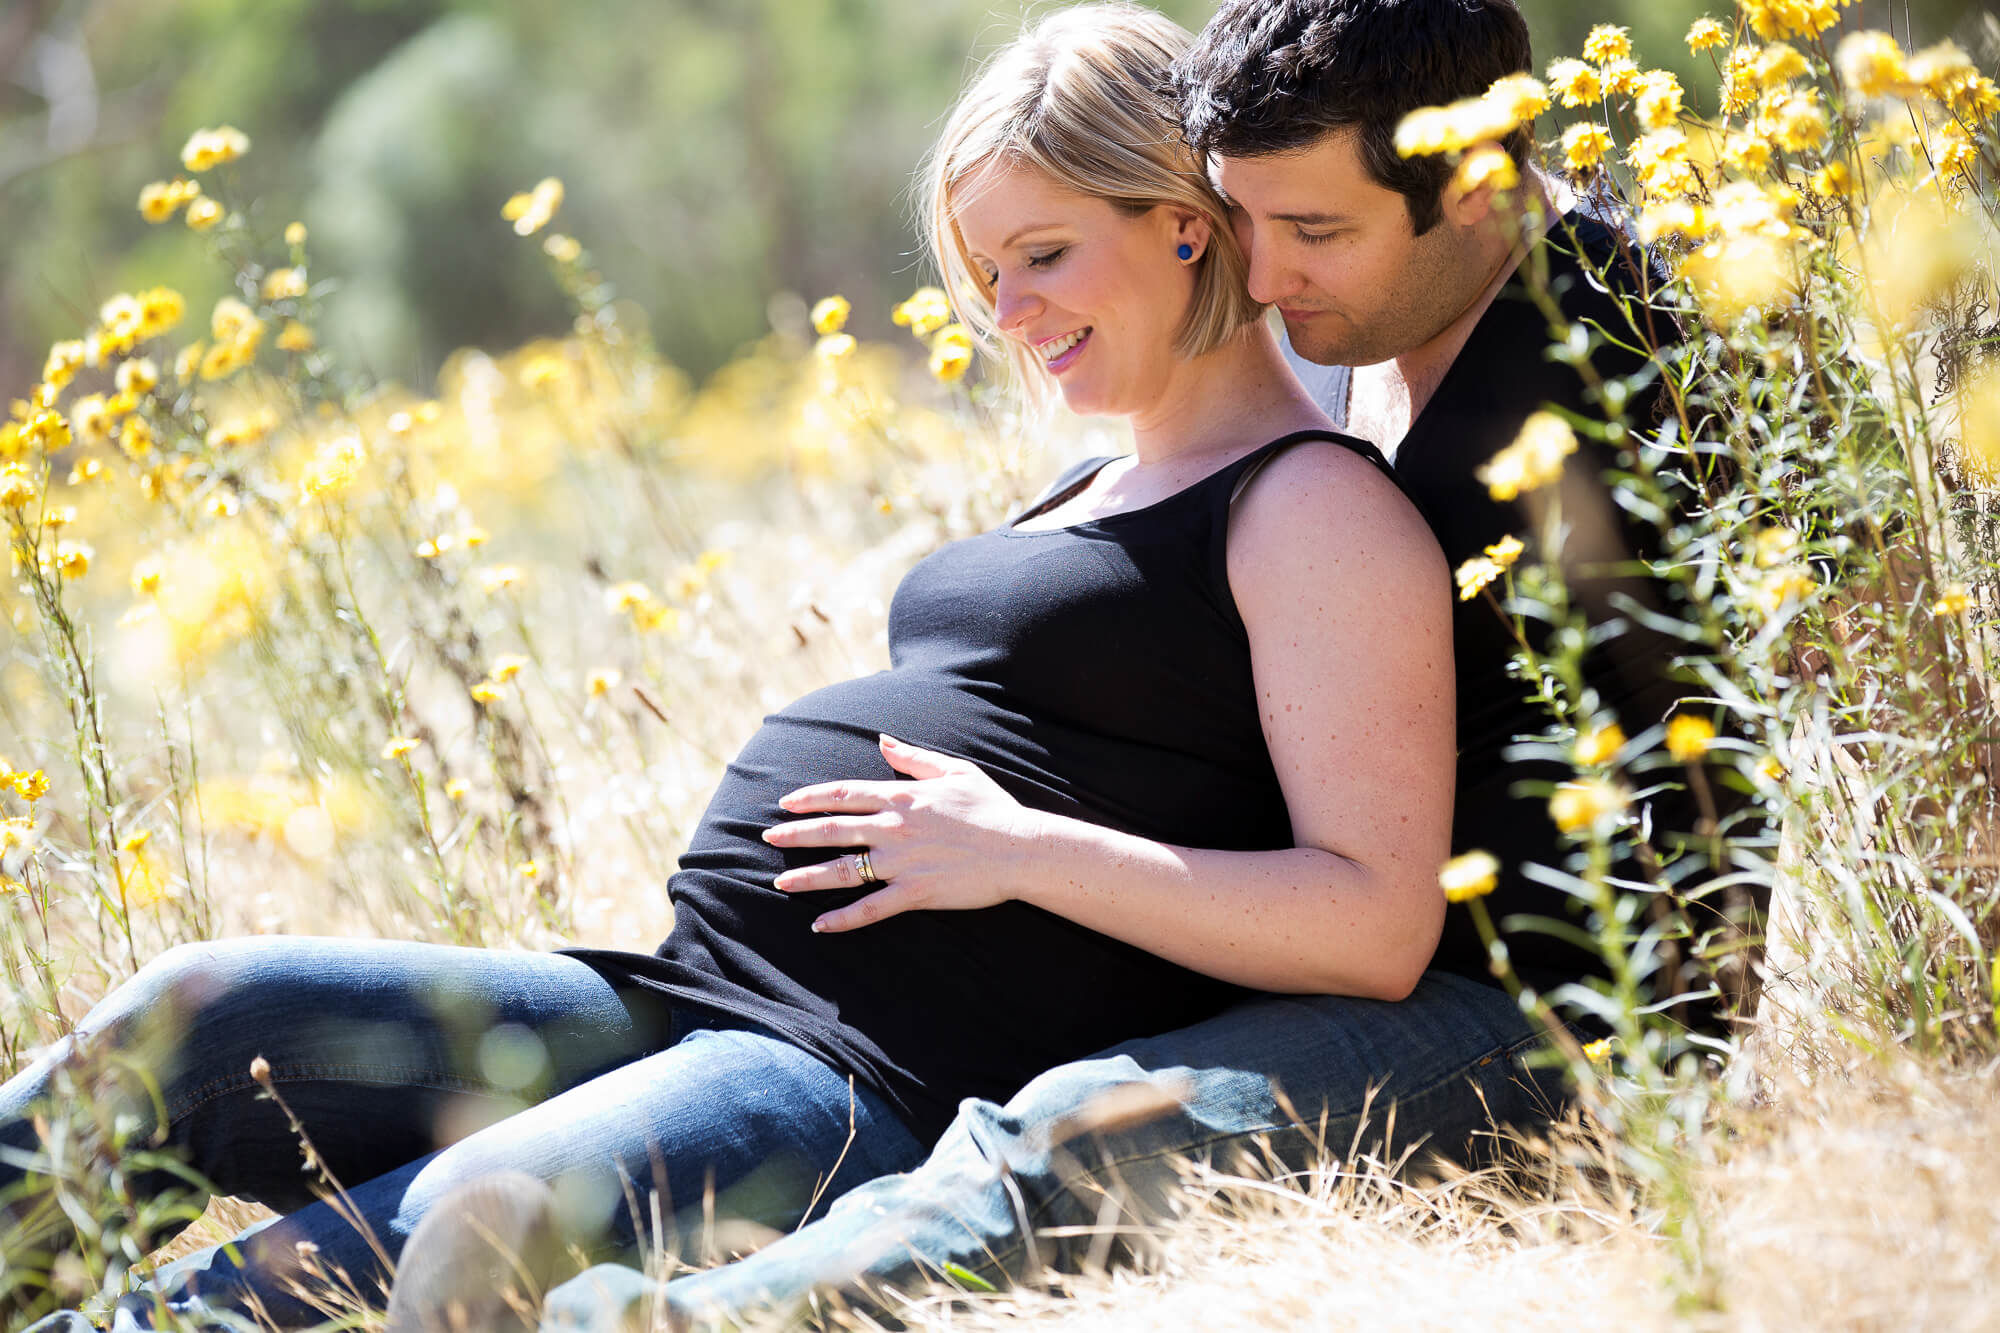 Maternity Photography Tips to Create Beautiful Memories - Digital Photograp...